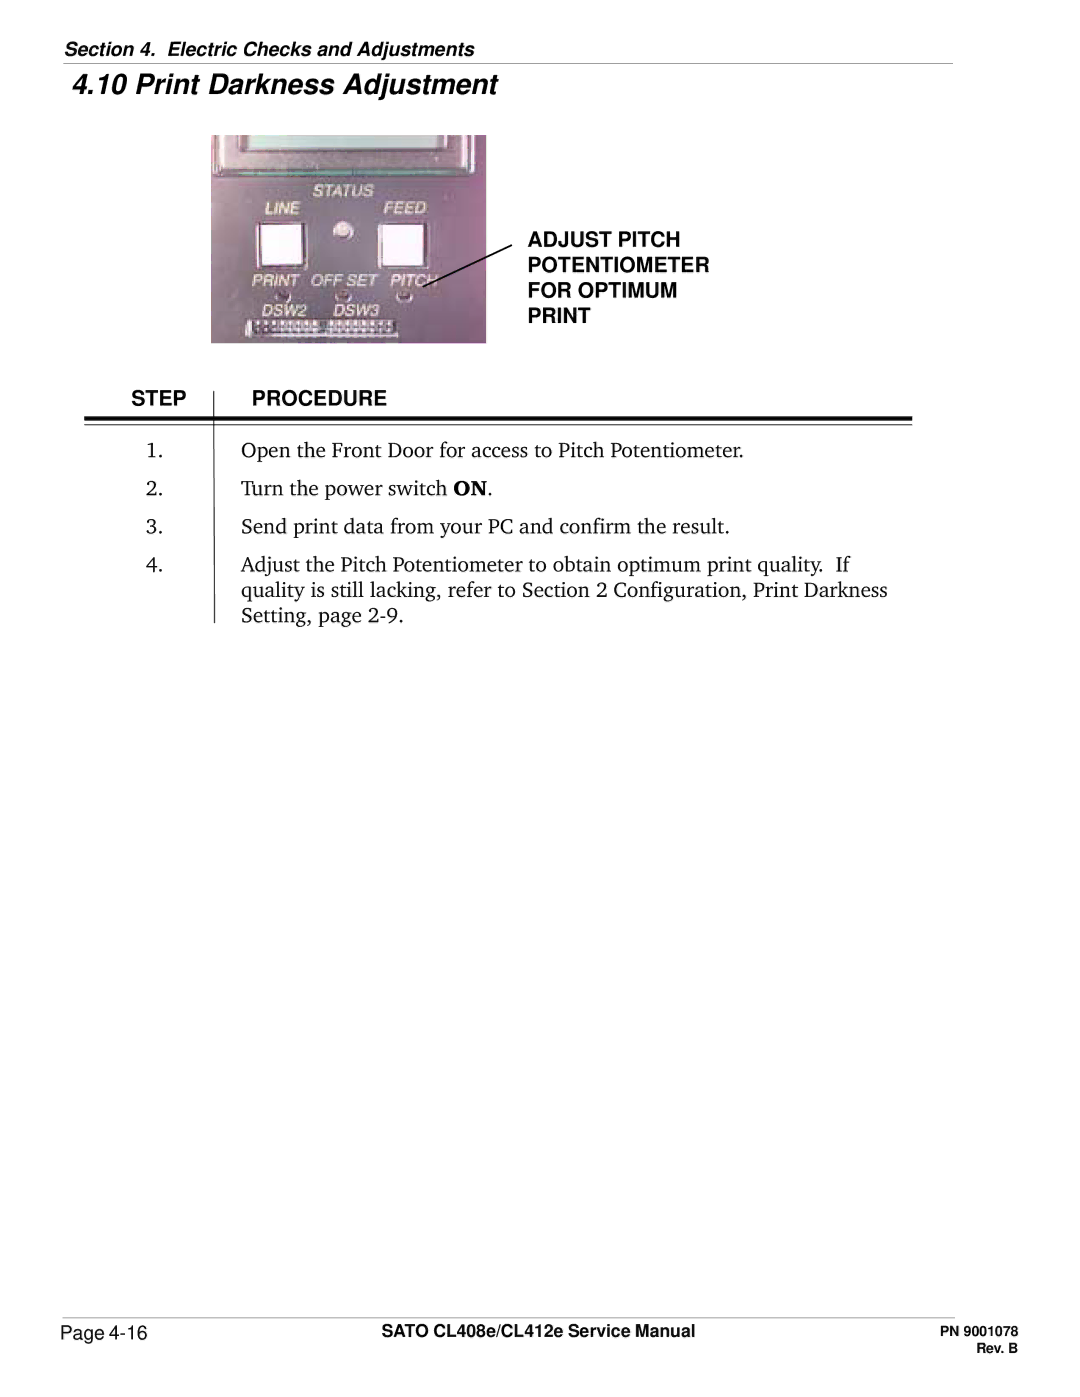 SATO CL412E service manual Print Darkness Adjustment, Adjust Pitch Potentiometer For Optimum Print Step Procedure 